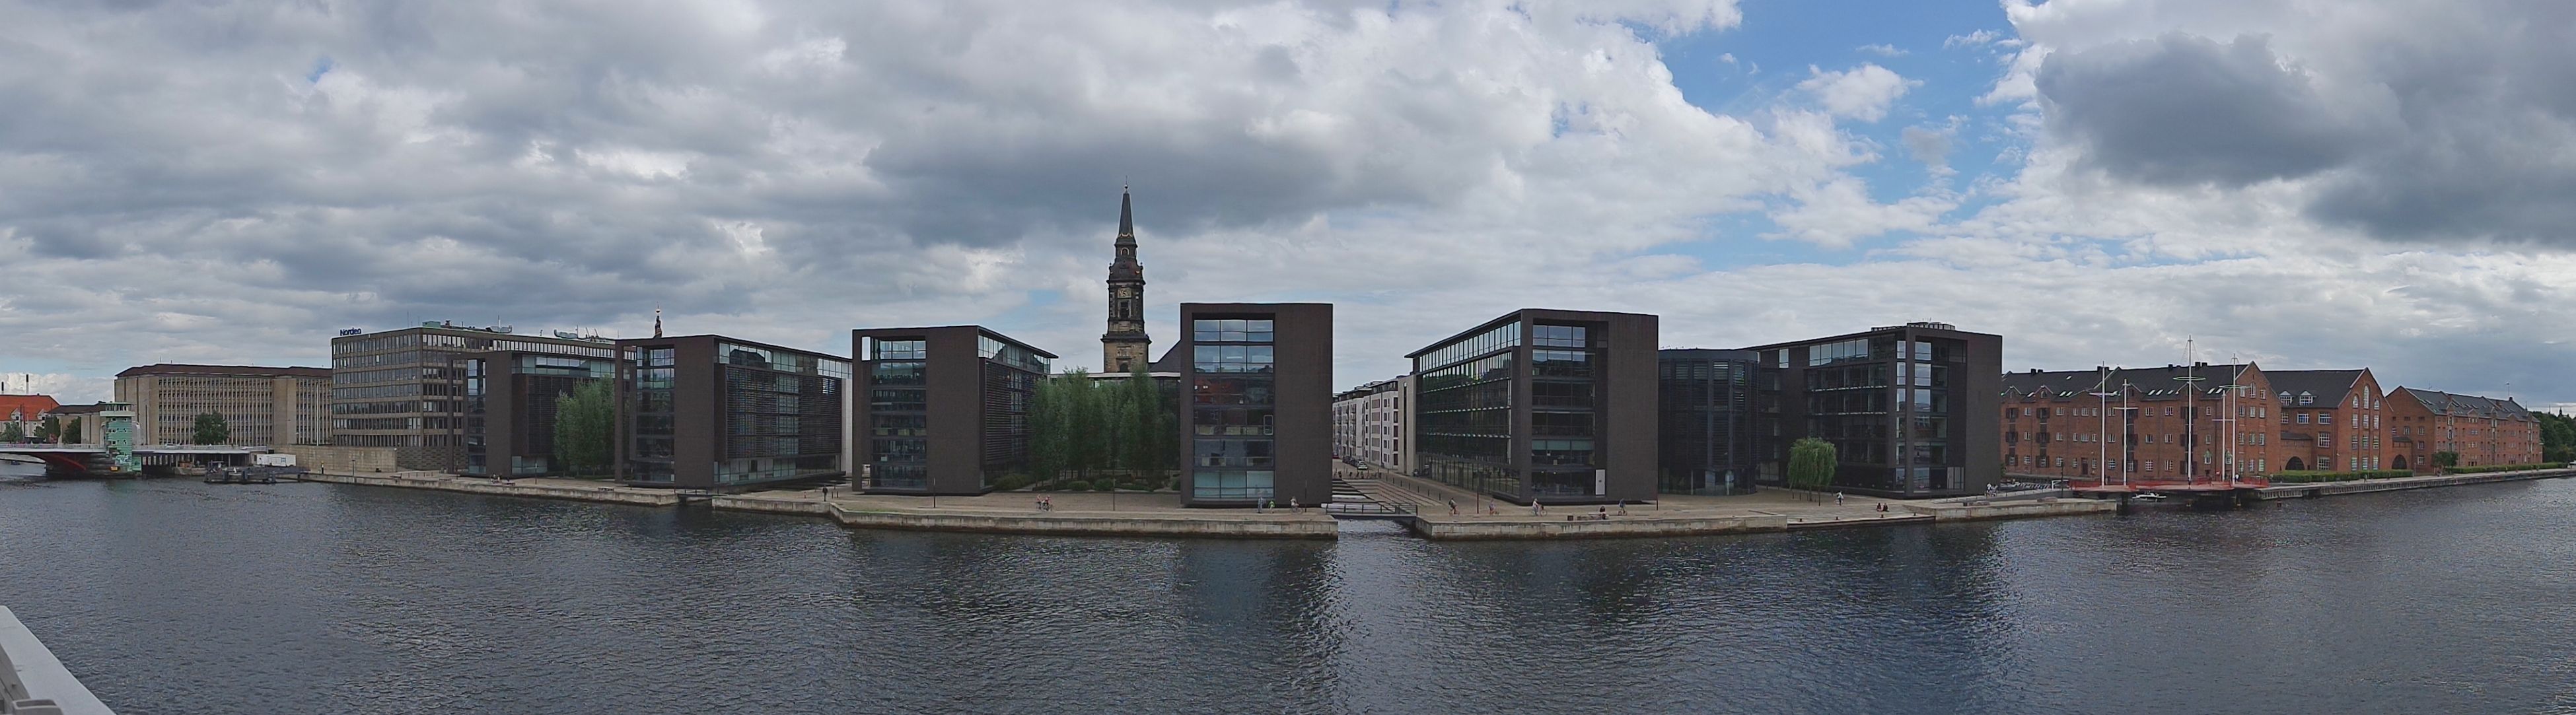 Панорама Копенгагена с обзорной площадки